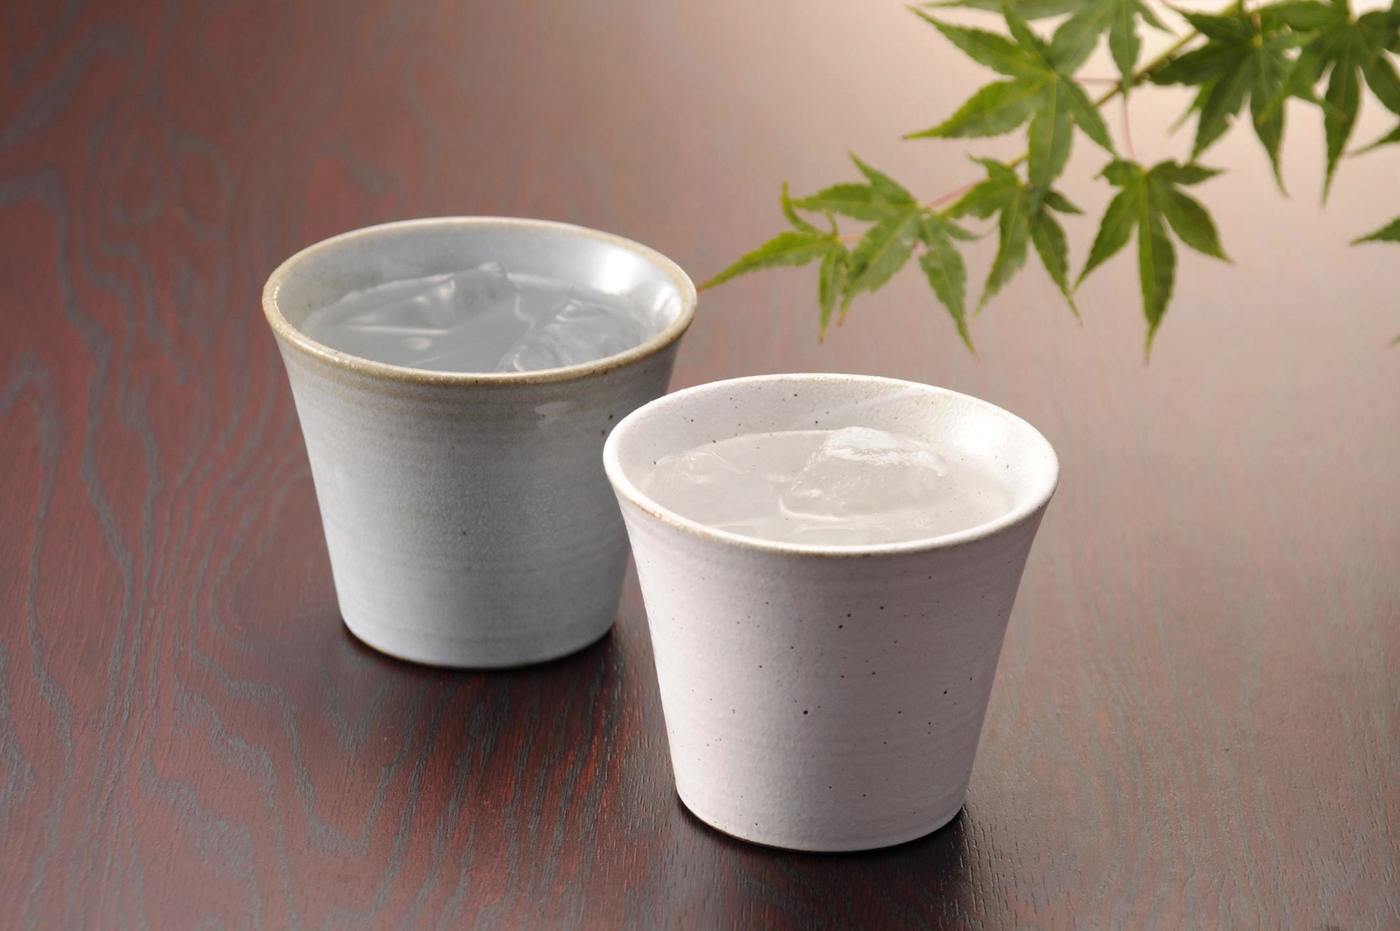 396円 品質保証 陶器 二重構造 キーポ 焼酎カップ 焼締 日本製